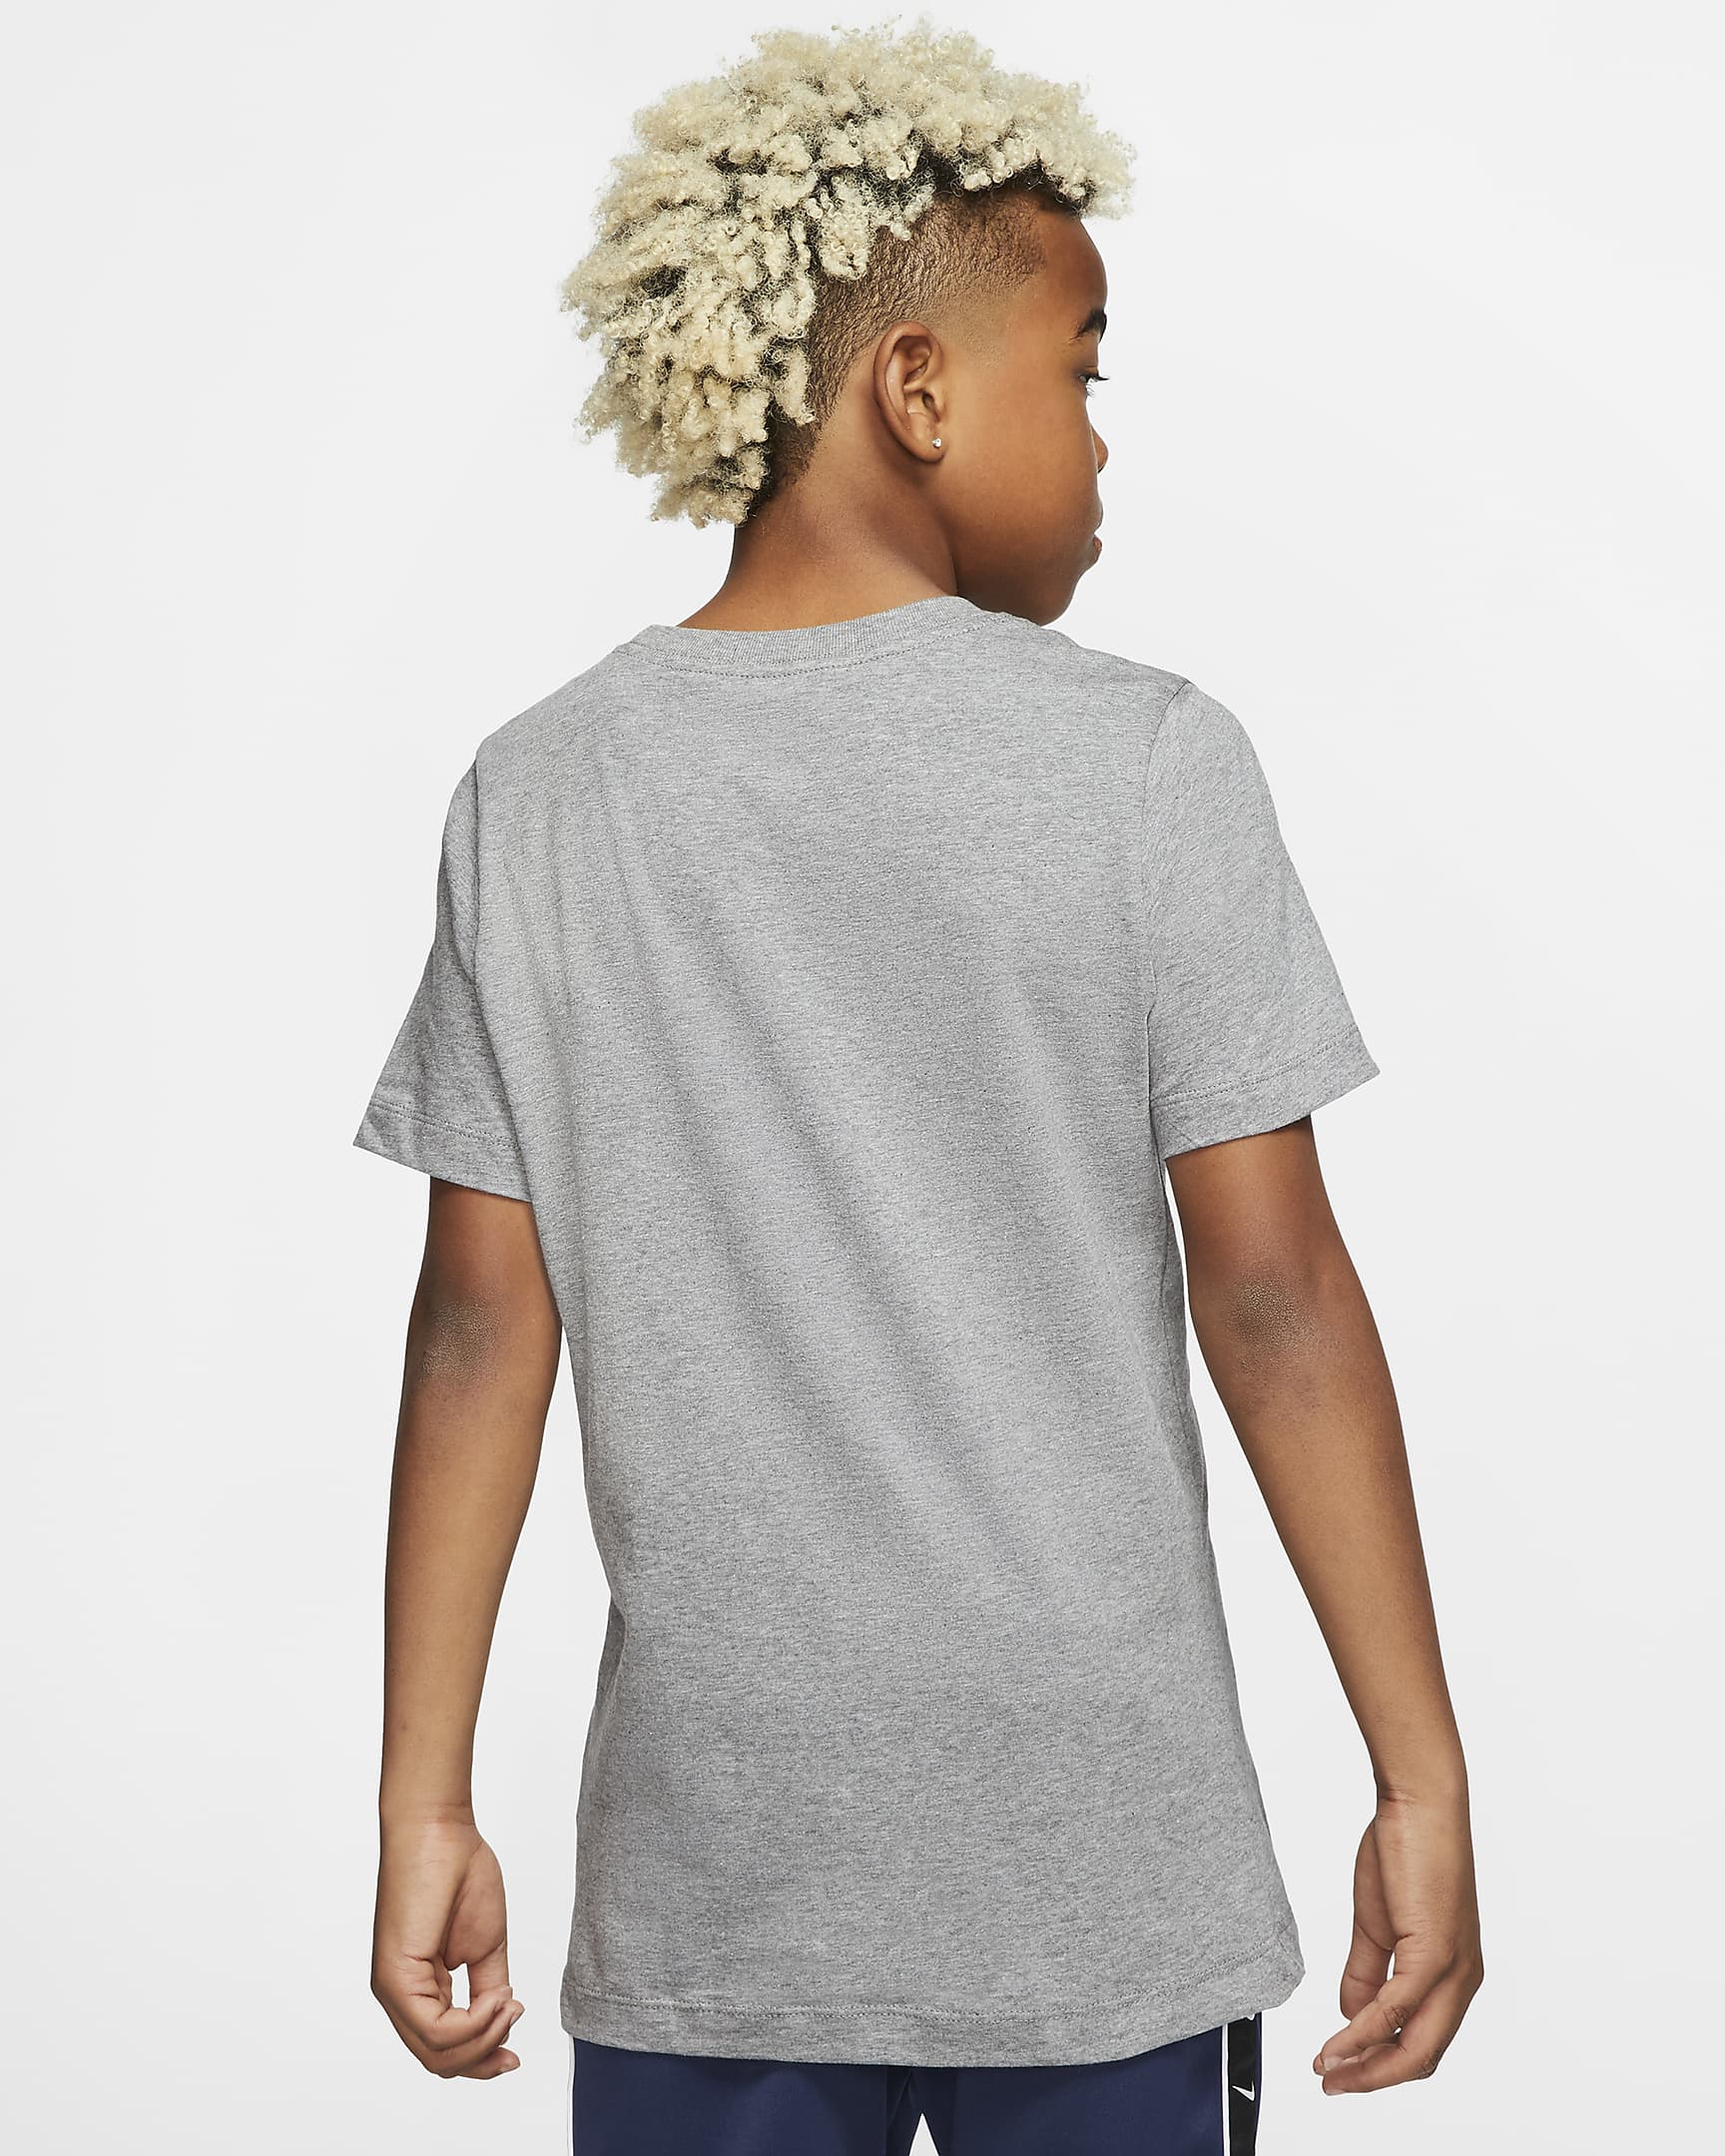 Nike Sportswear Older Kids' Cotton T-Shirt - Carbon Heather/Black/White